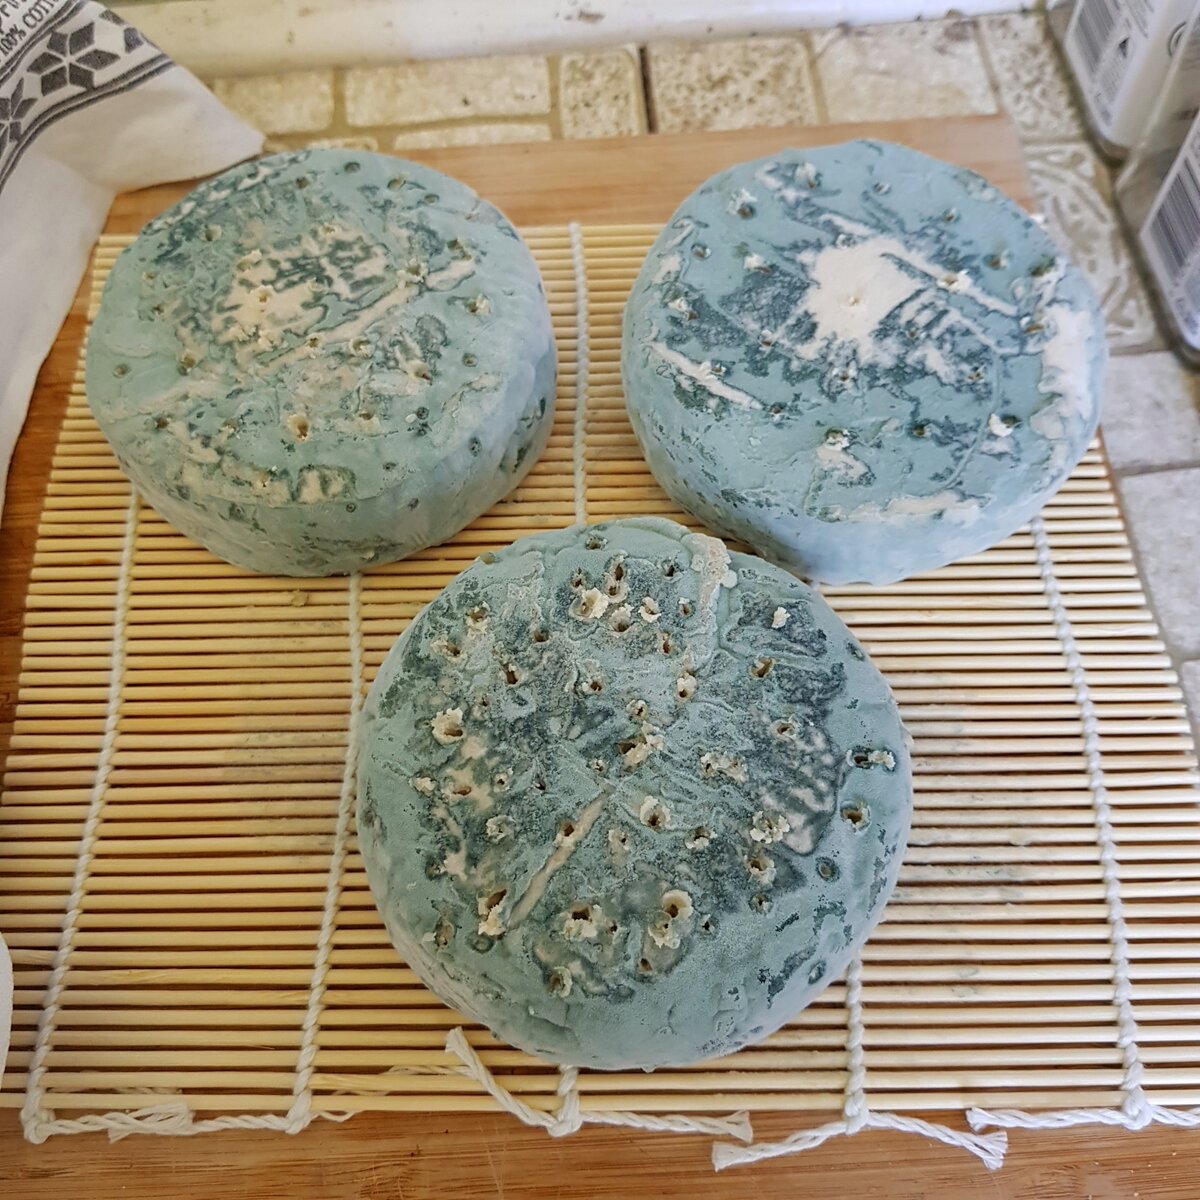 Vegan Blue Cheese aging